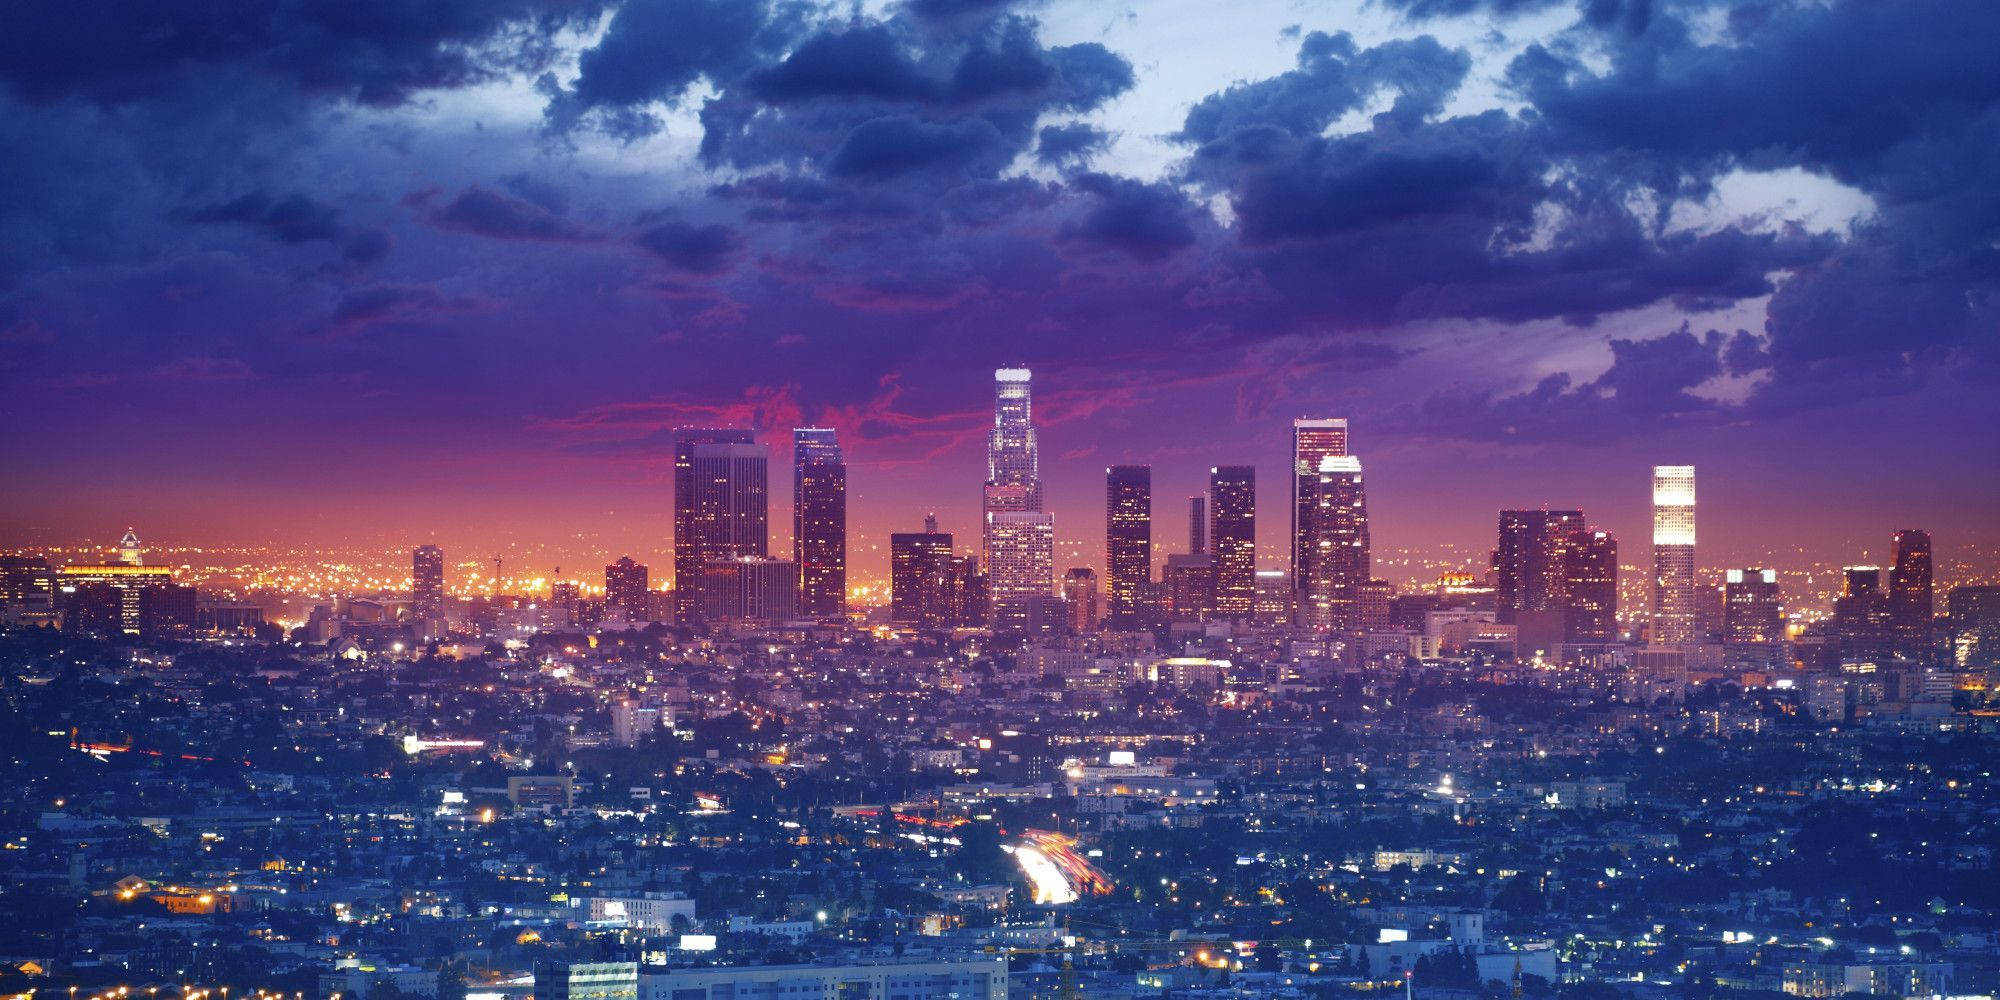 Download Cinematic Skyline Photo Of Los Angeles 4k Wallpaper